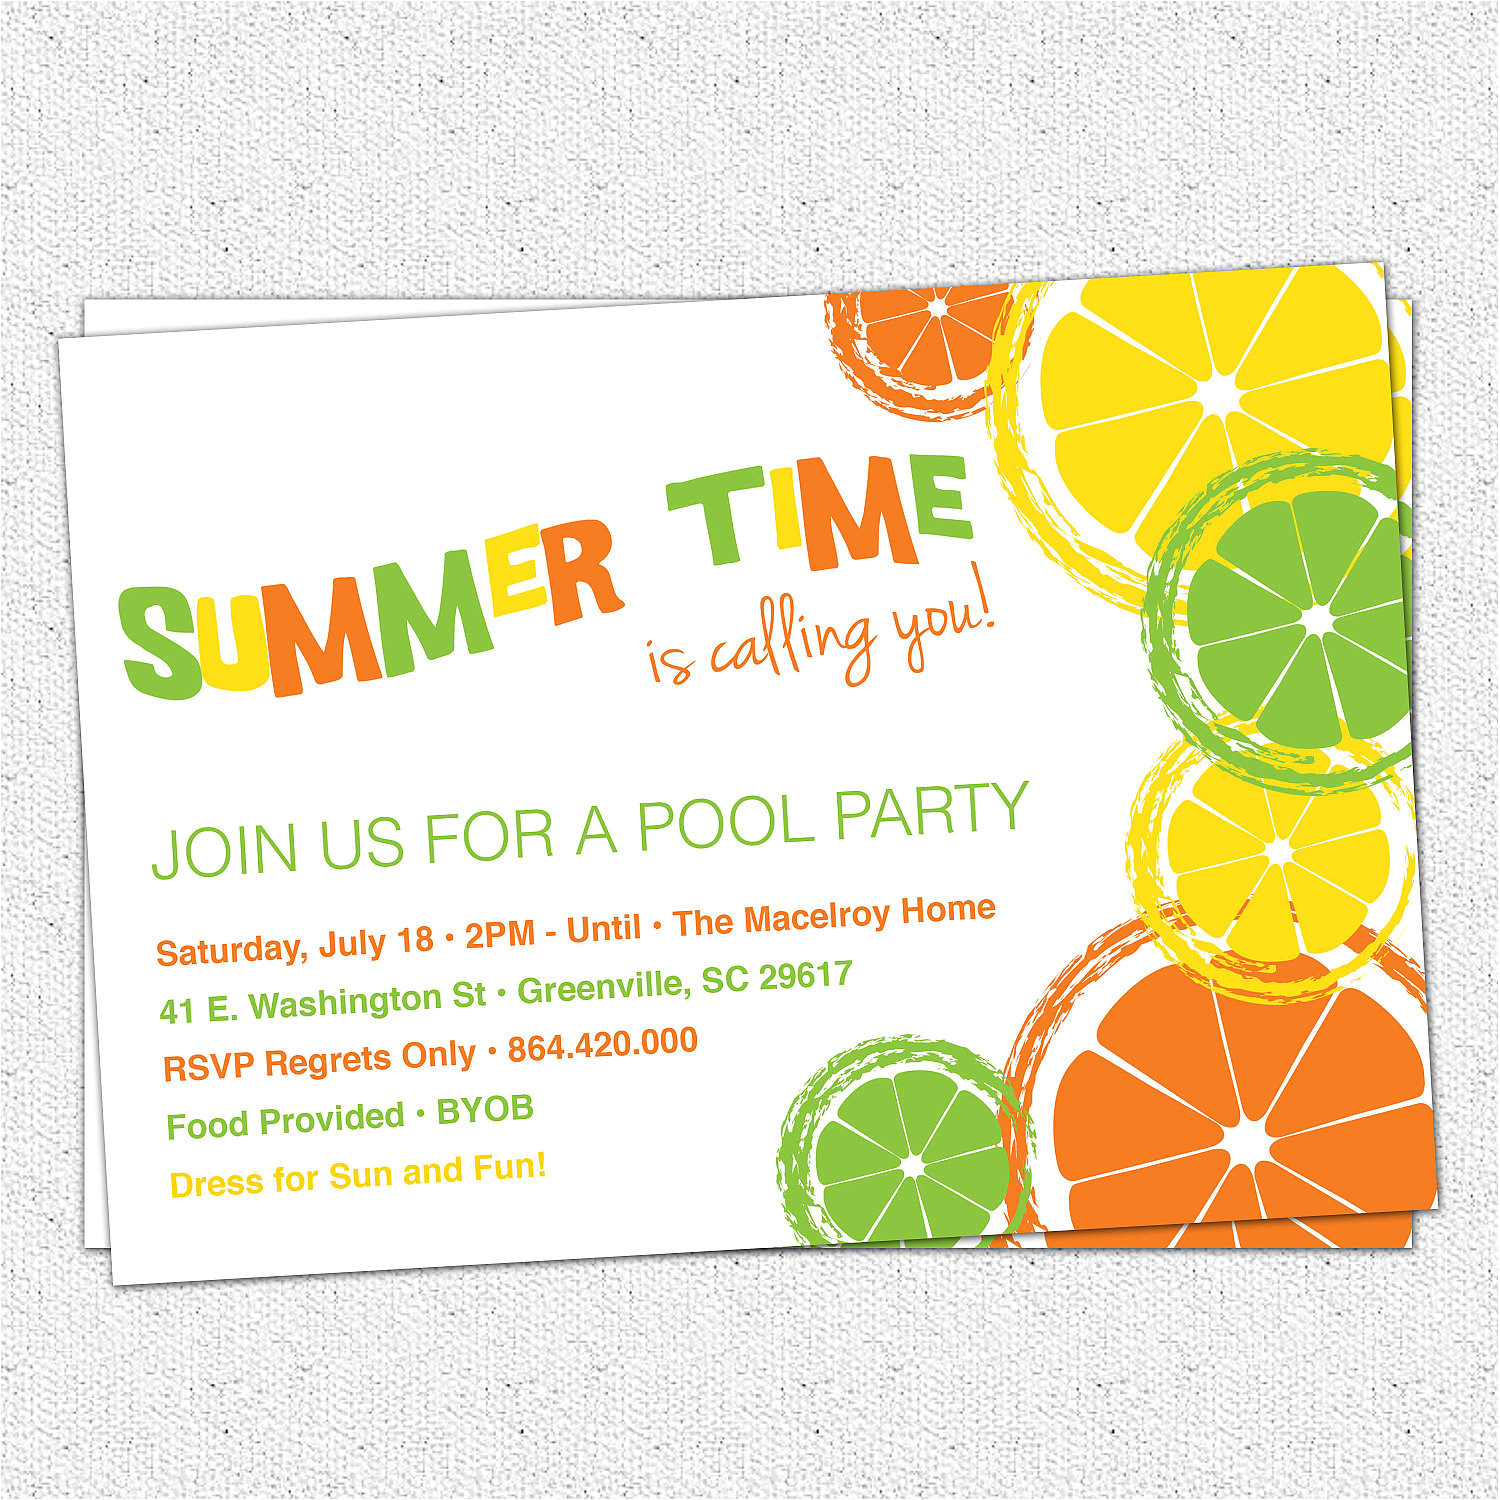 Summer Party Invitation Template Citrus Invitation Summer Pool Party Lemon Lime orange